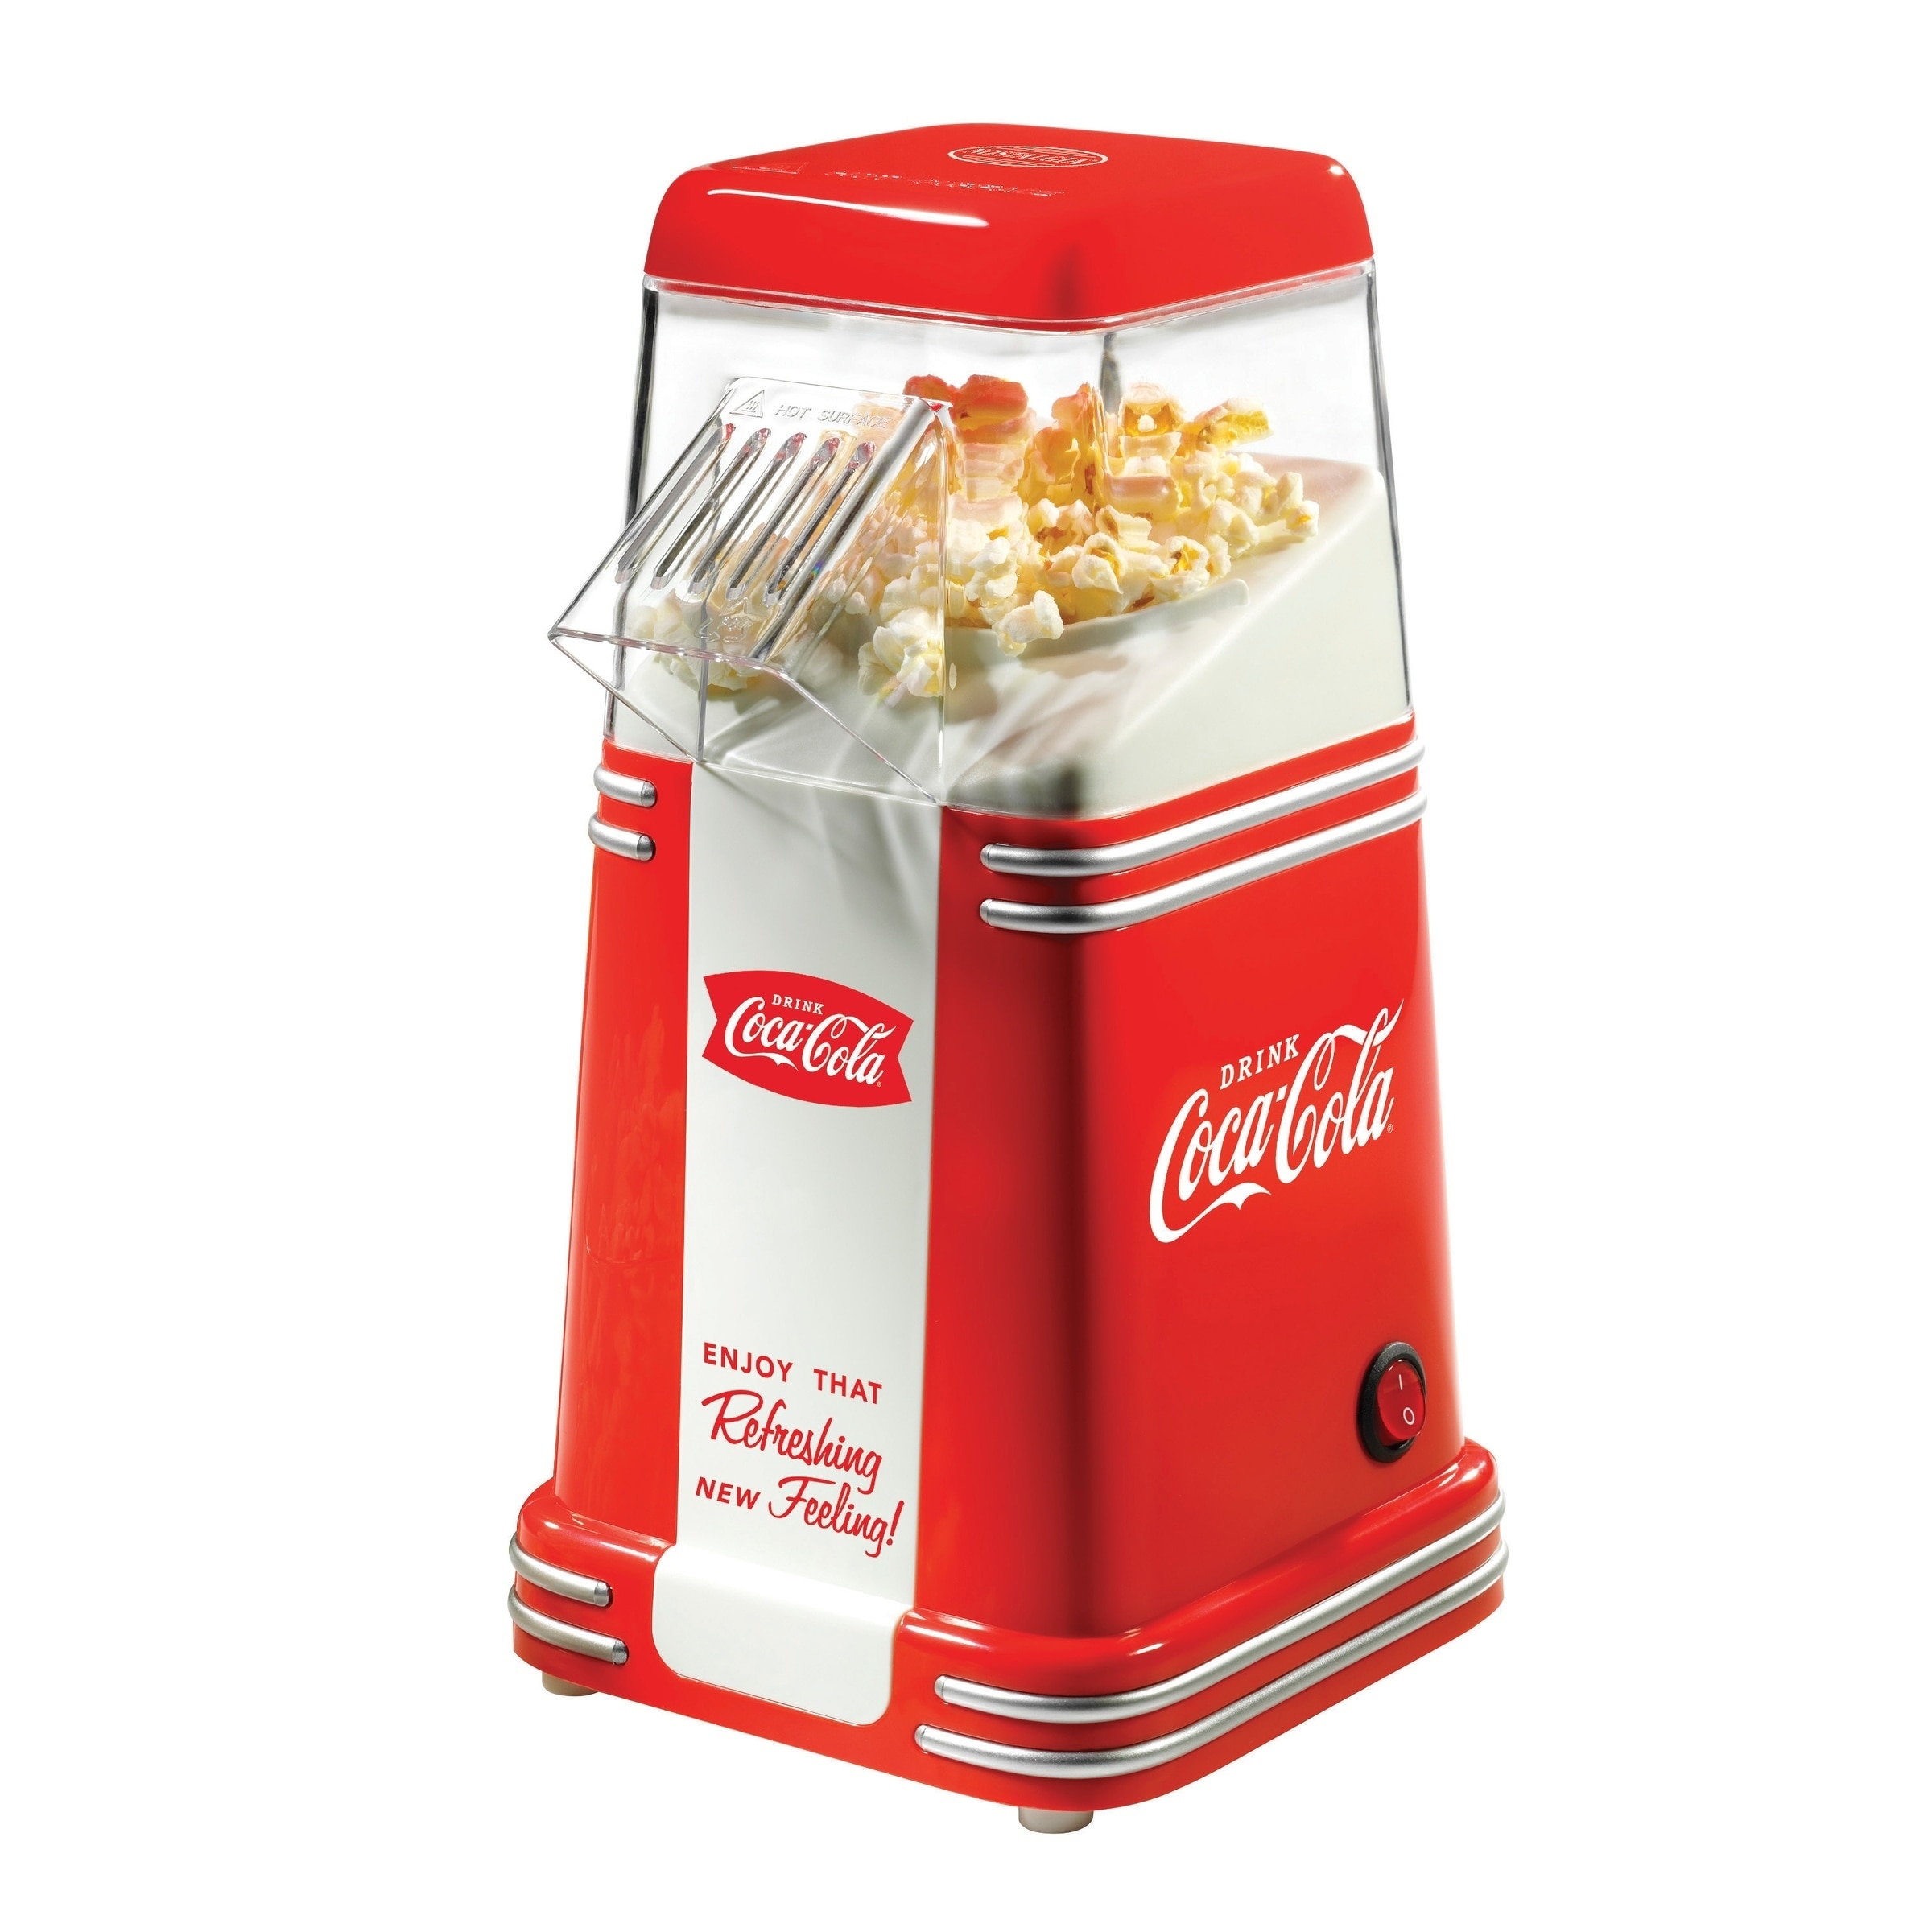 Coca-Cola Tabletop Kettle Popcorn Popper